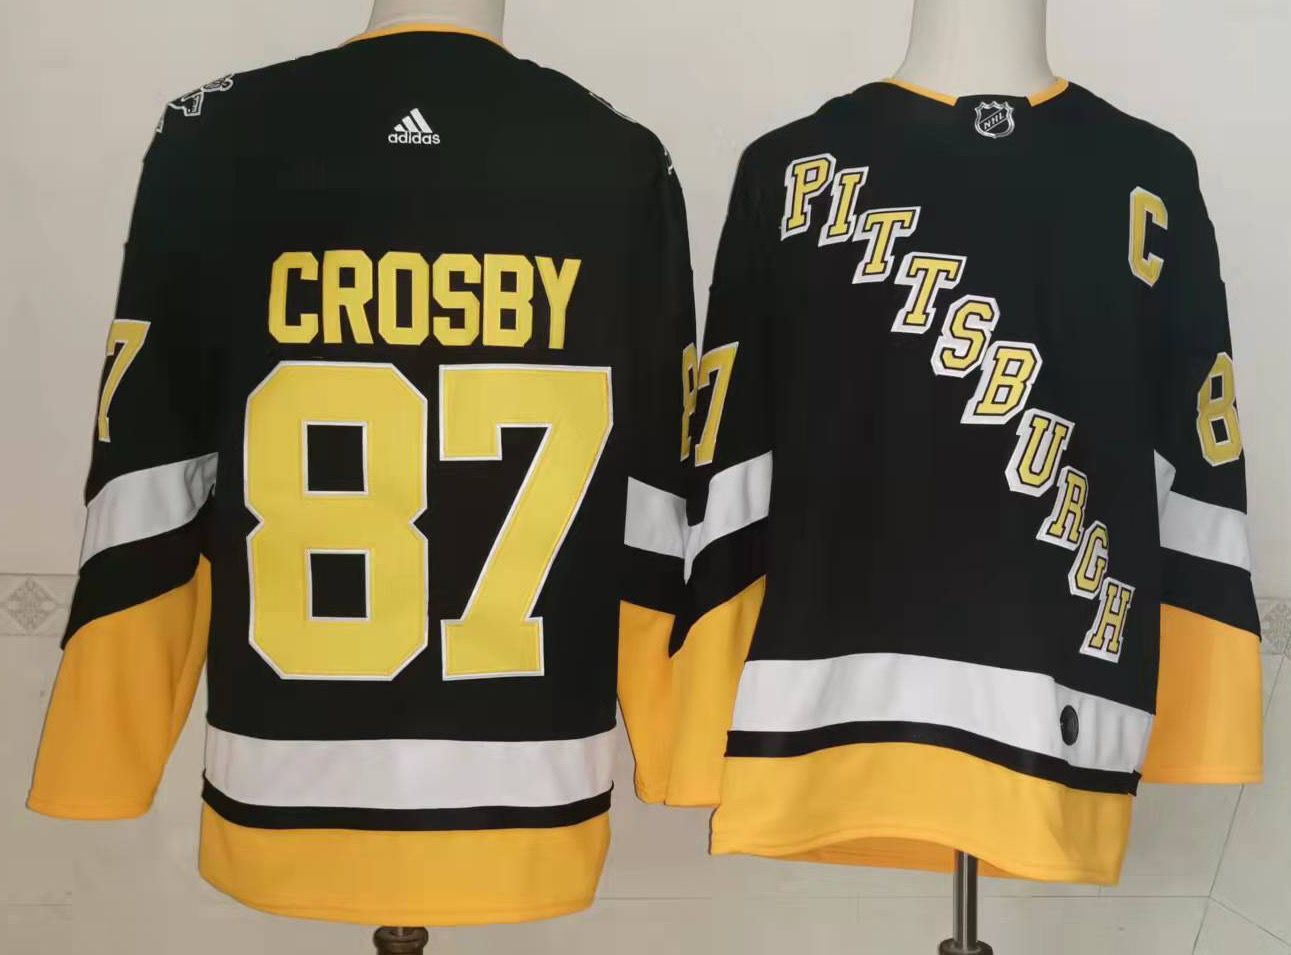 Adidas NHL Pittsburgh Penguins #87 Crosby Black Jersey